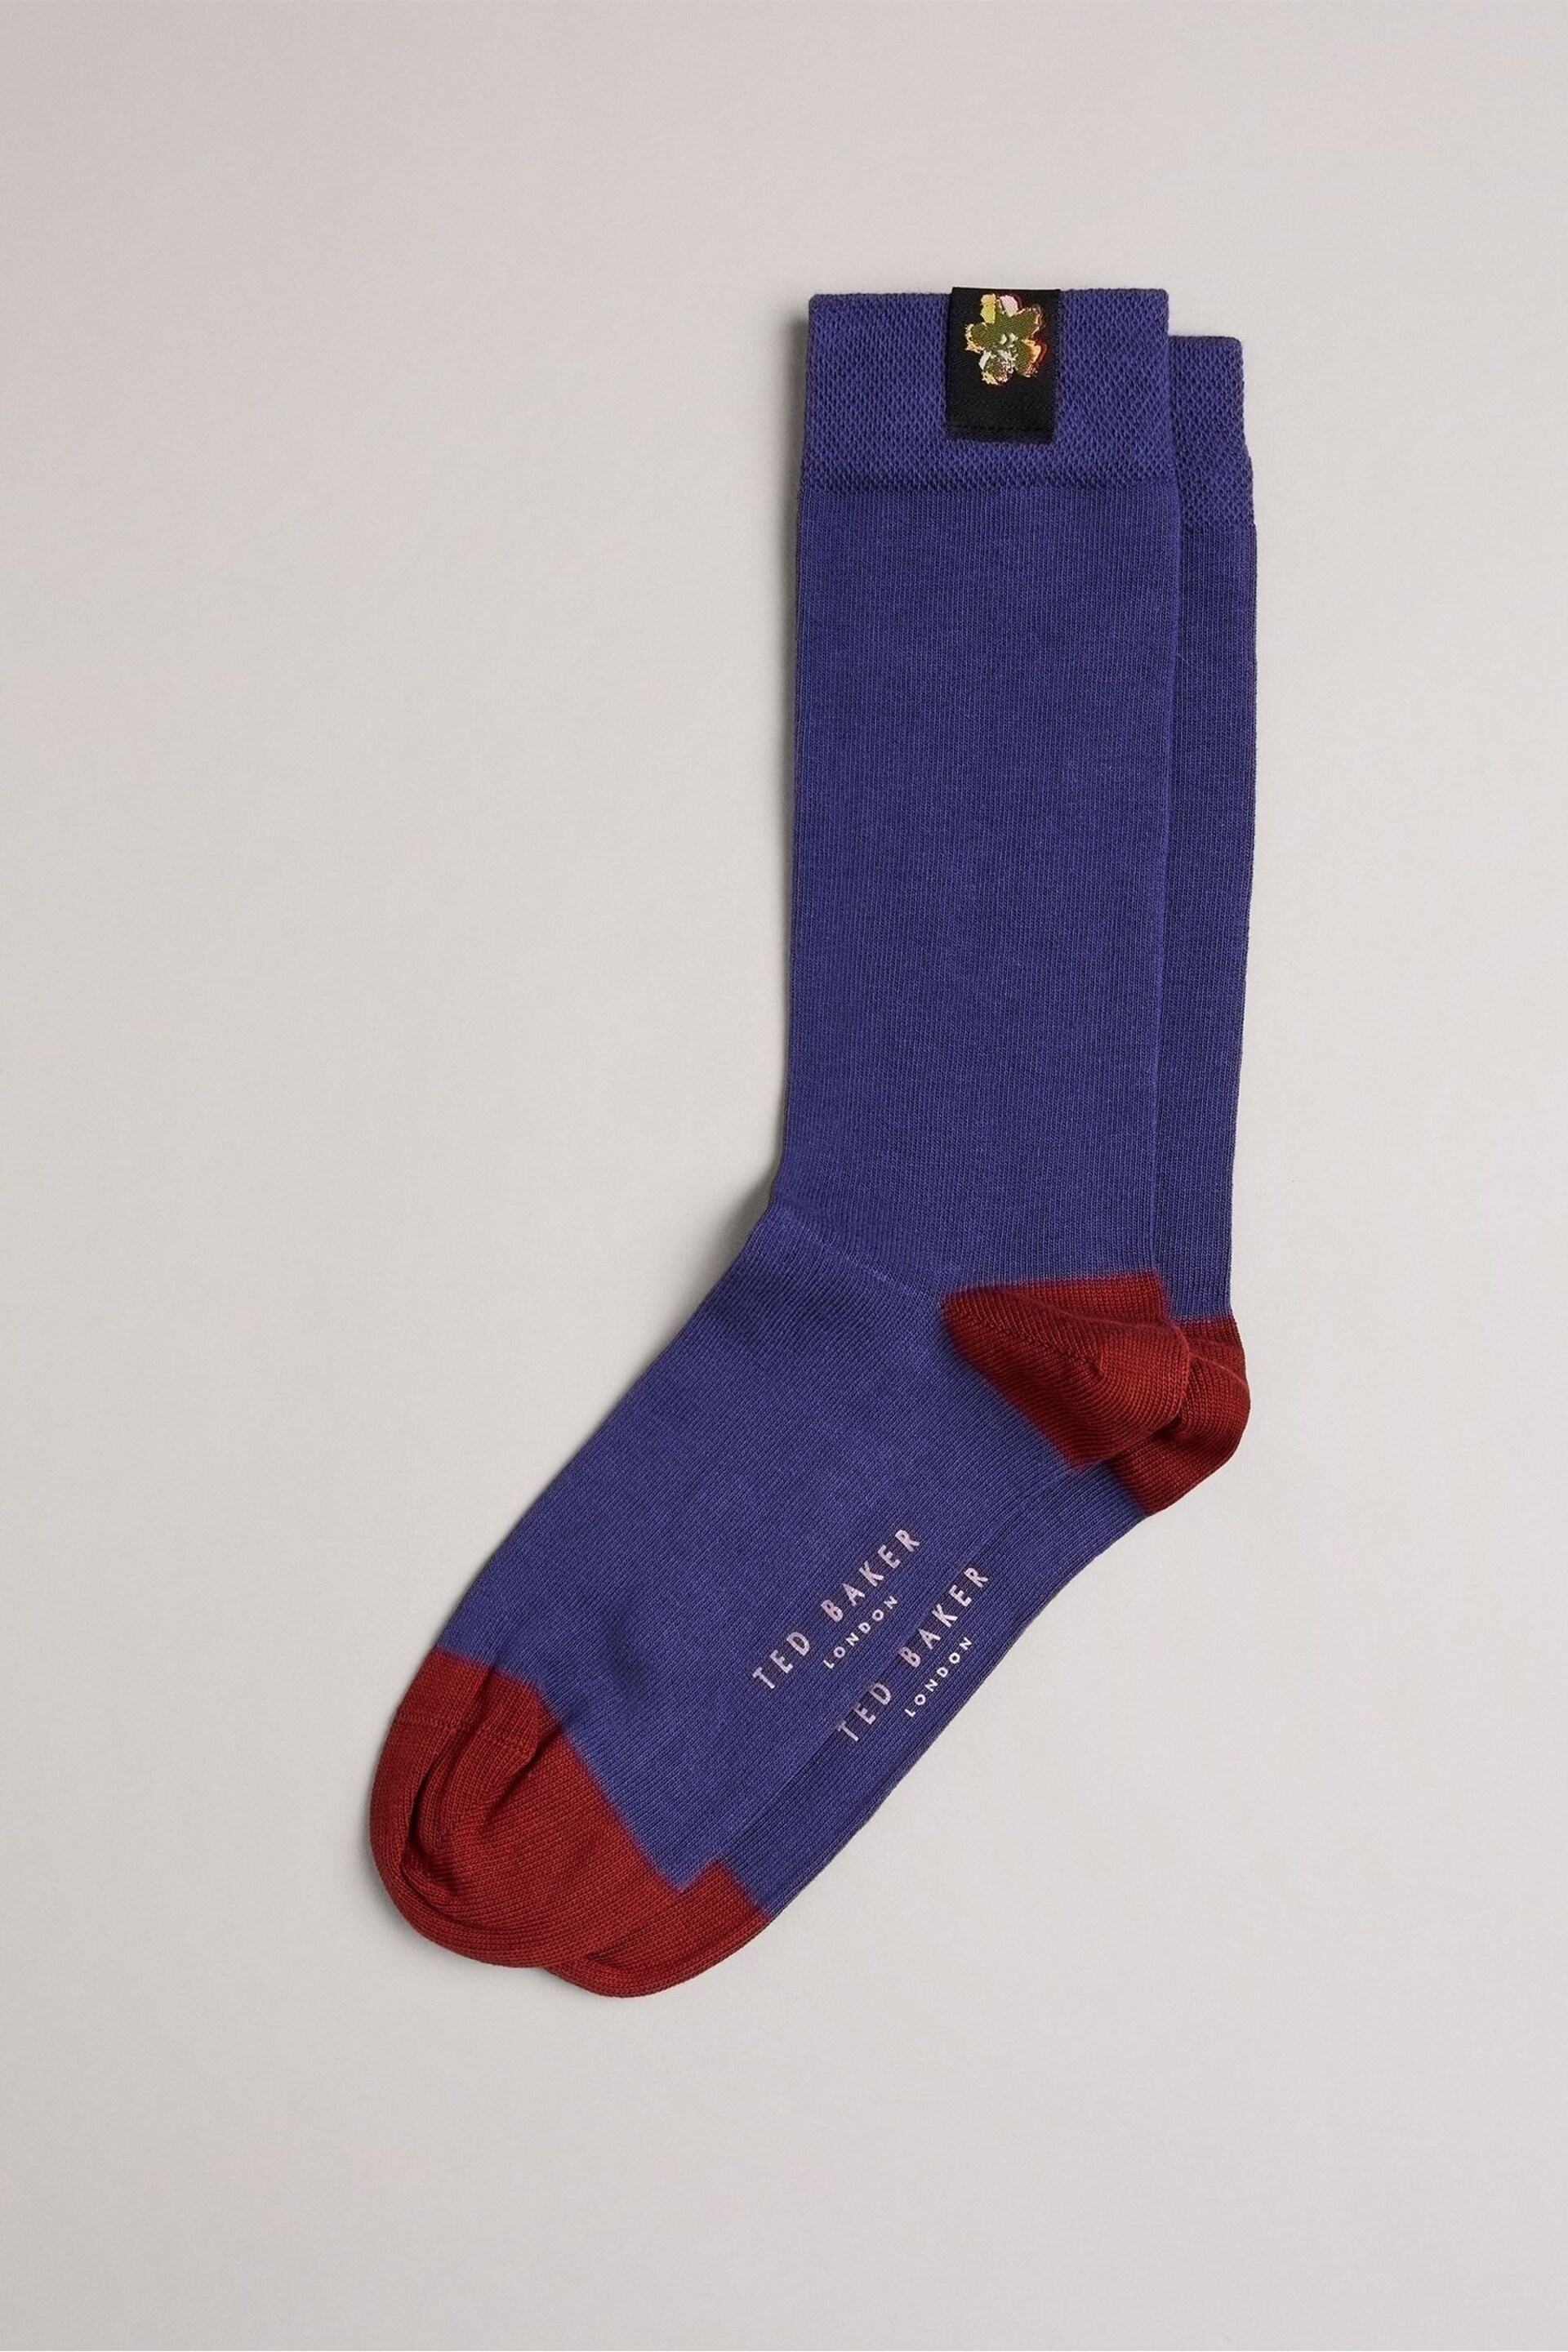 Ted Baker Blue Classic Mid Plain Socks - Image 2 of 3